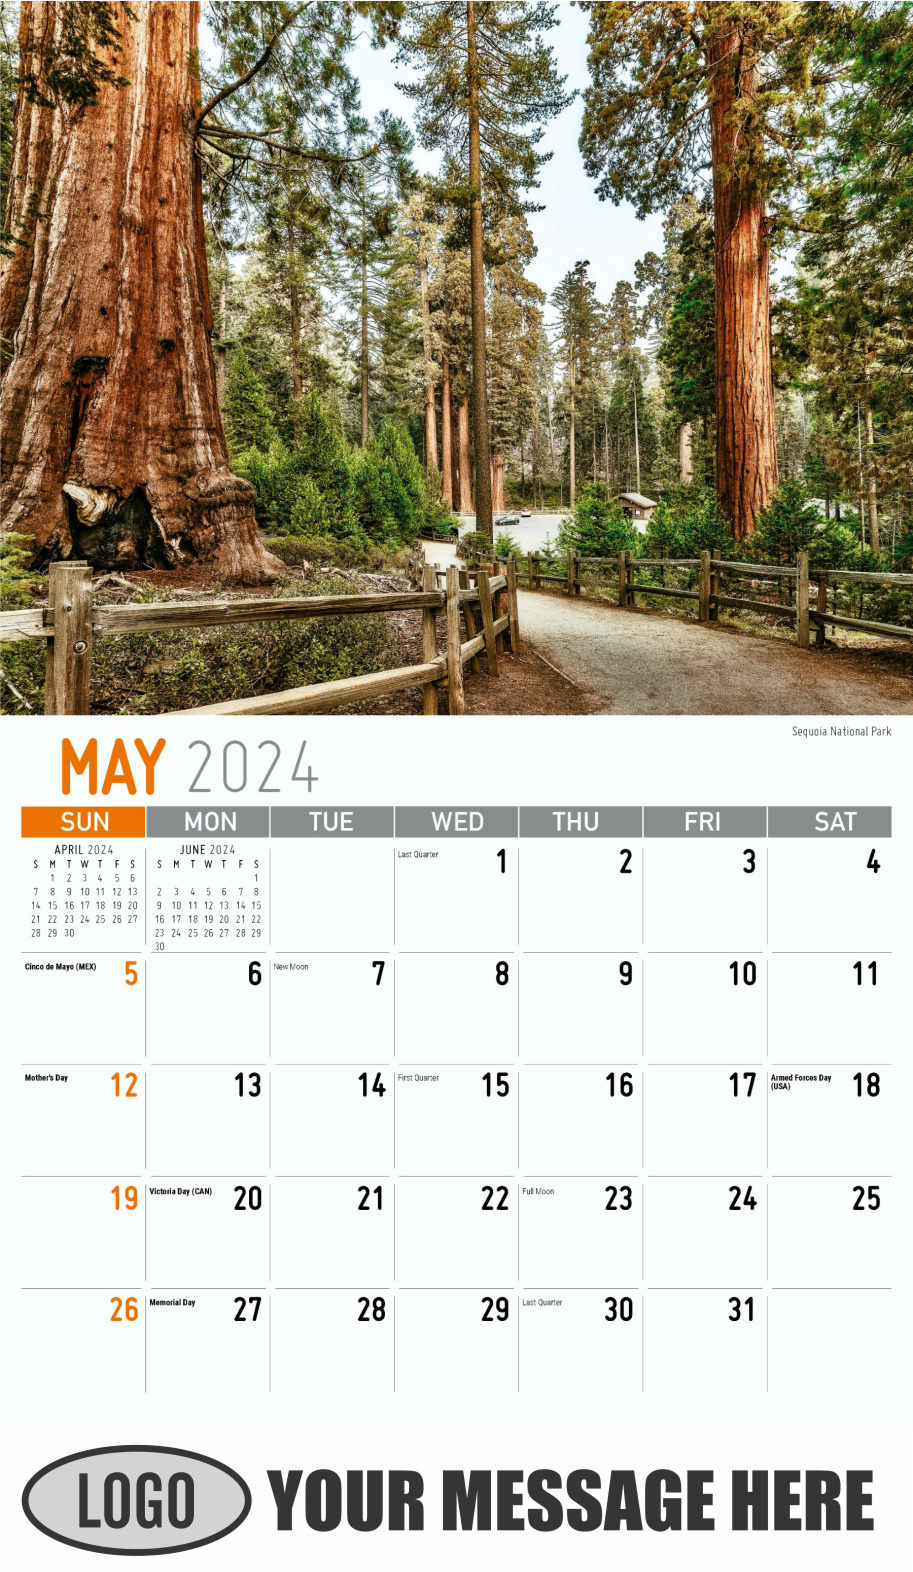 Scenes of California 2024 Business Advertising Wall Calendar - May